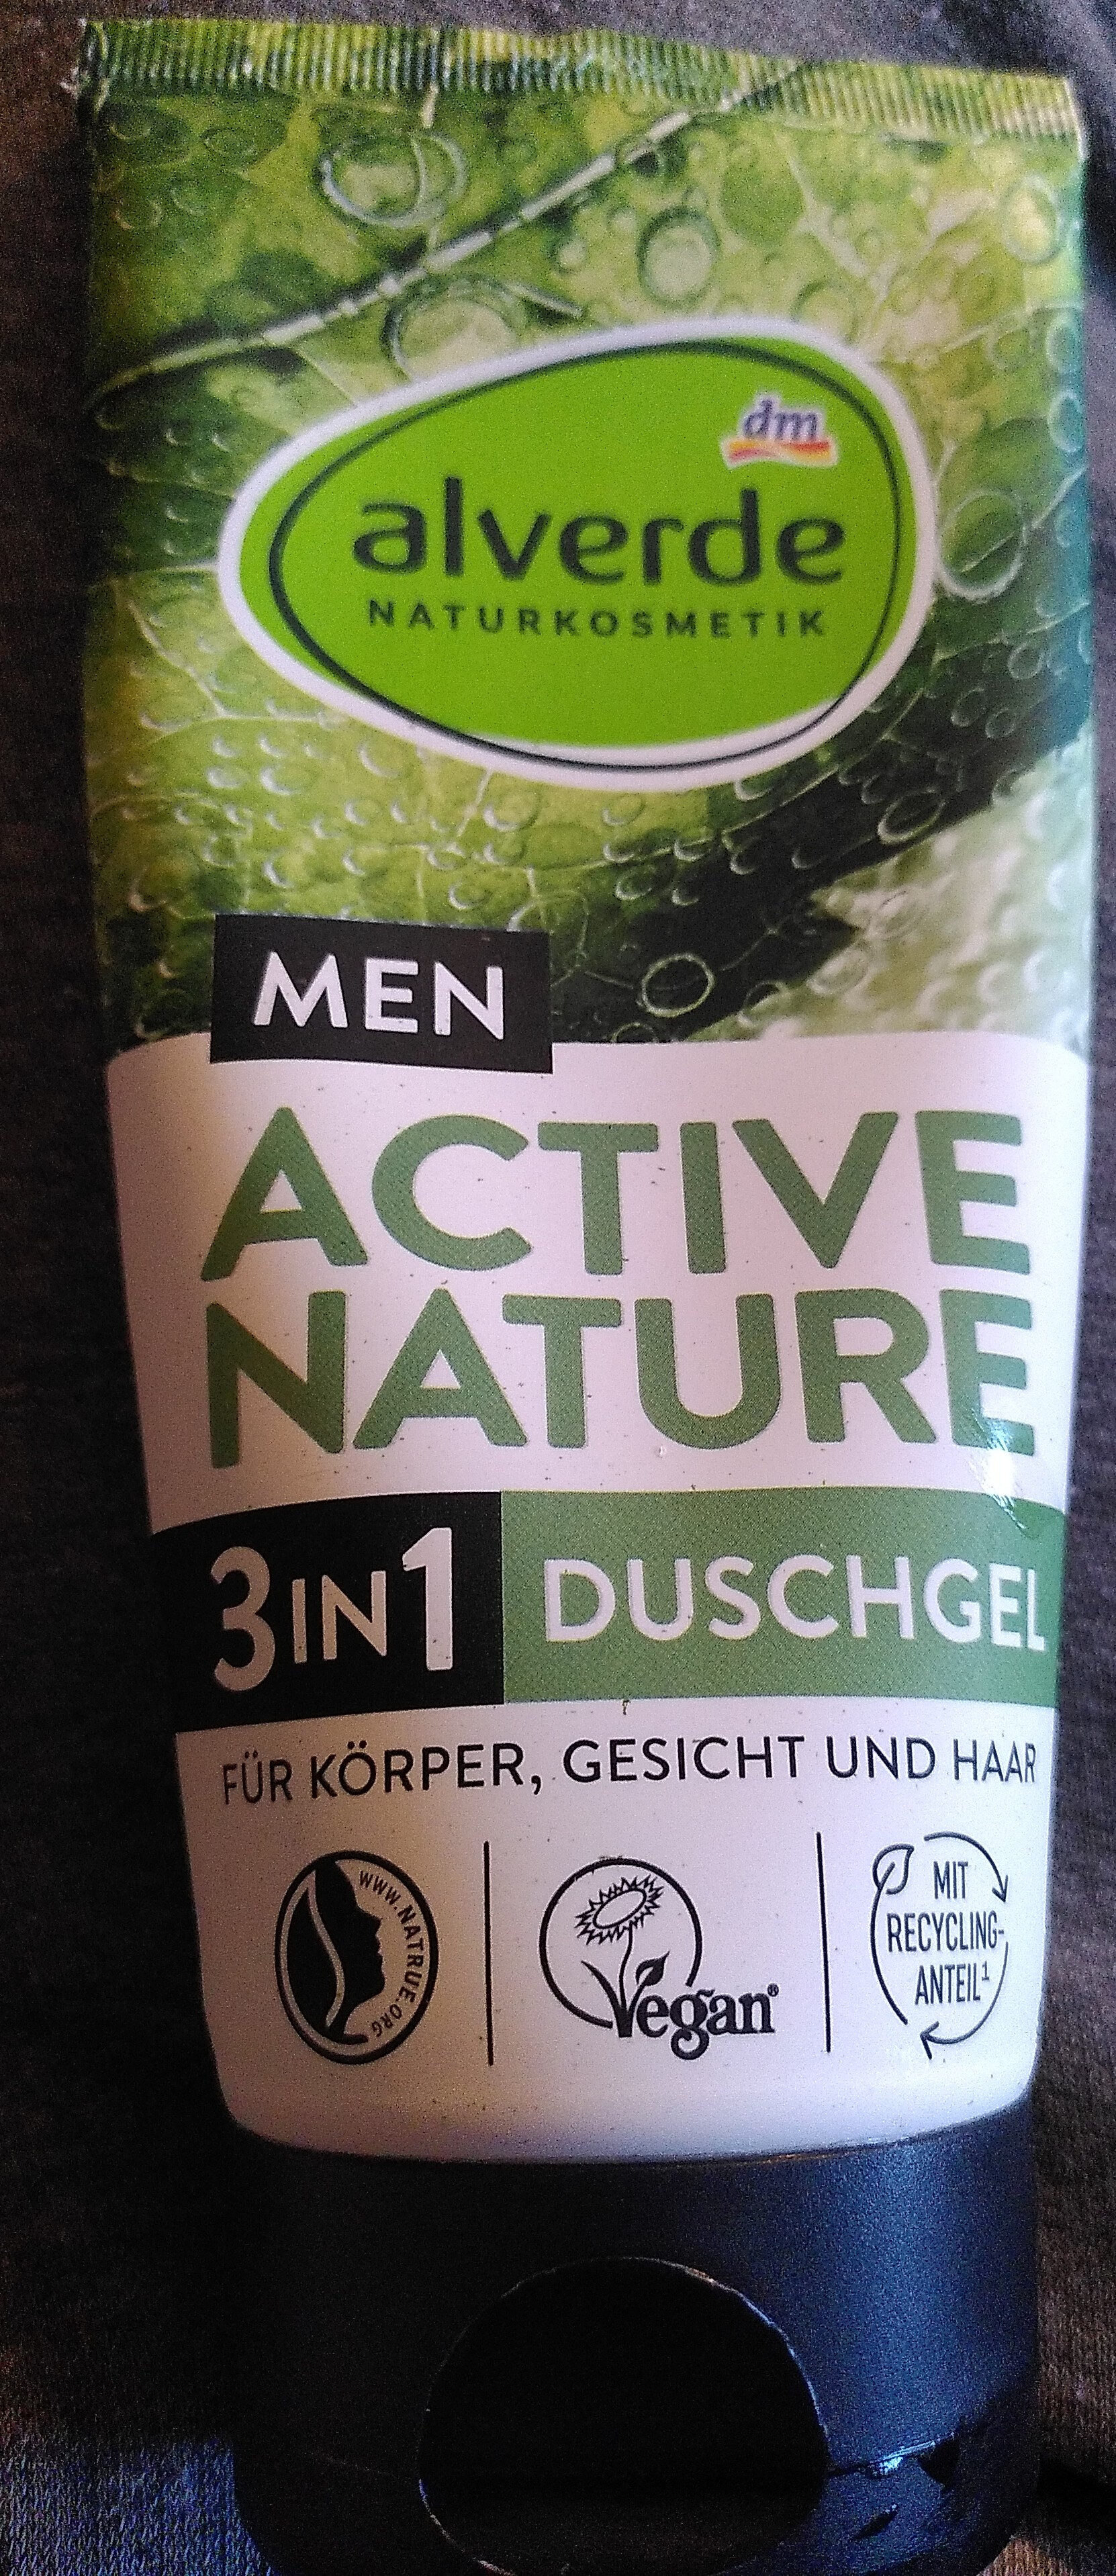 Men Active Nature - Product - en